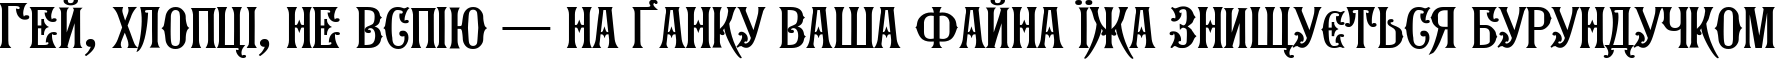 Пример написания шрифтом Seminaria Normal текста на украинском